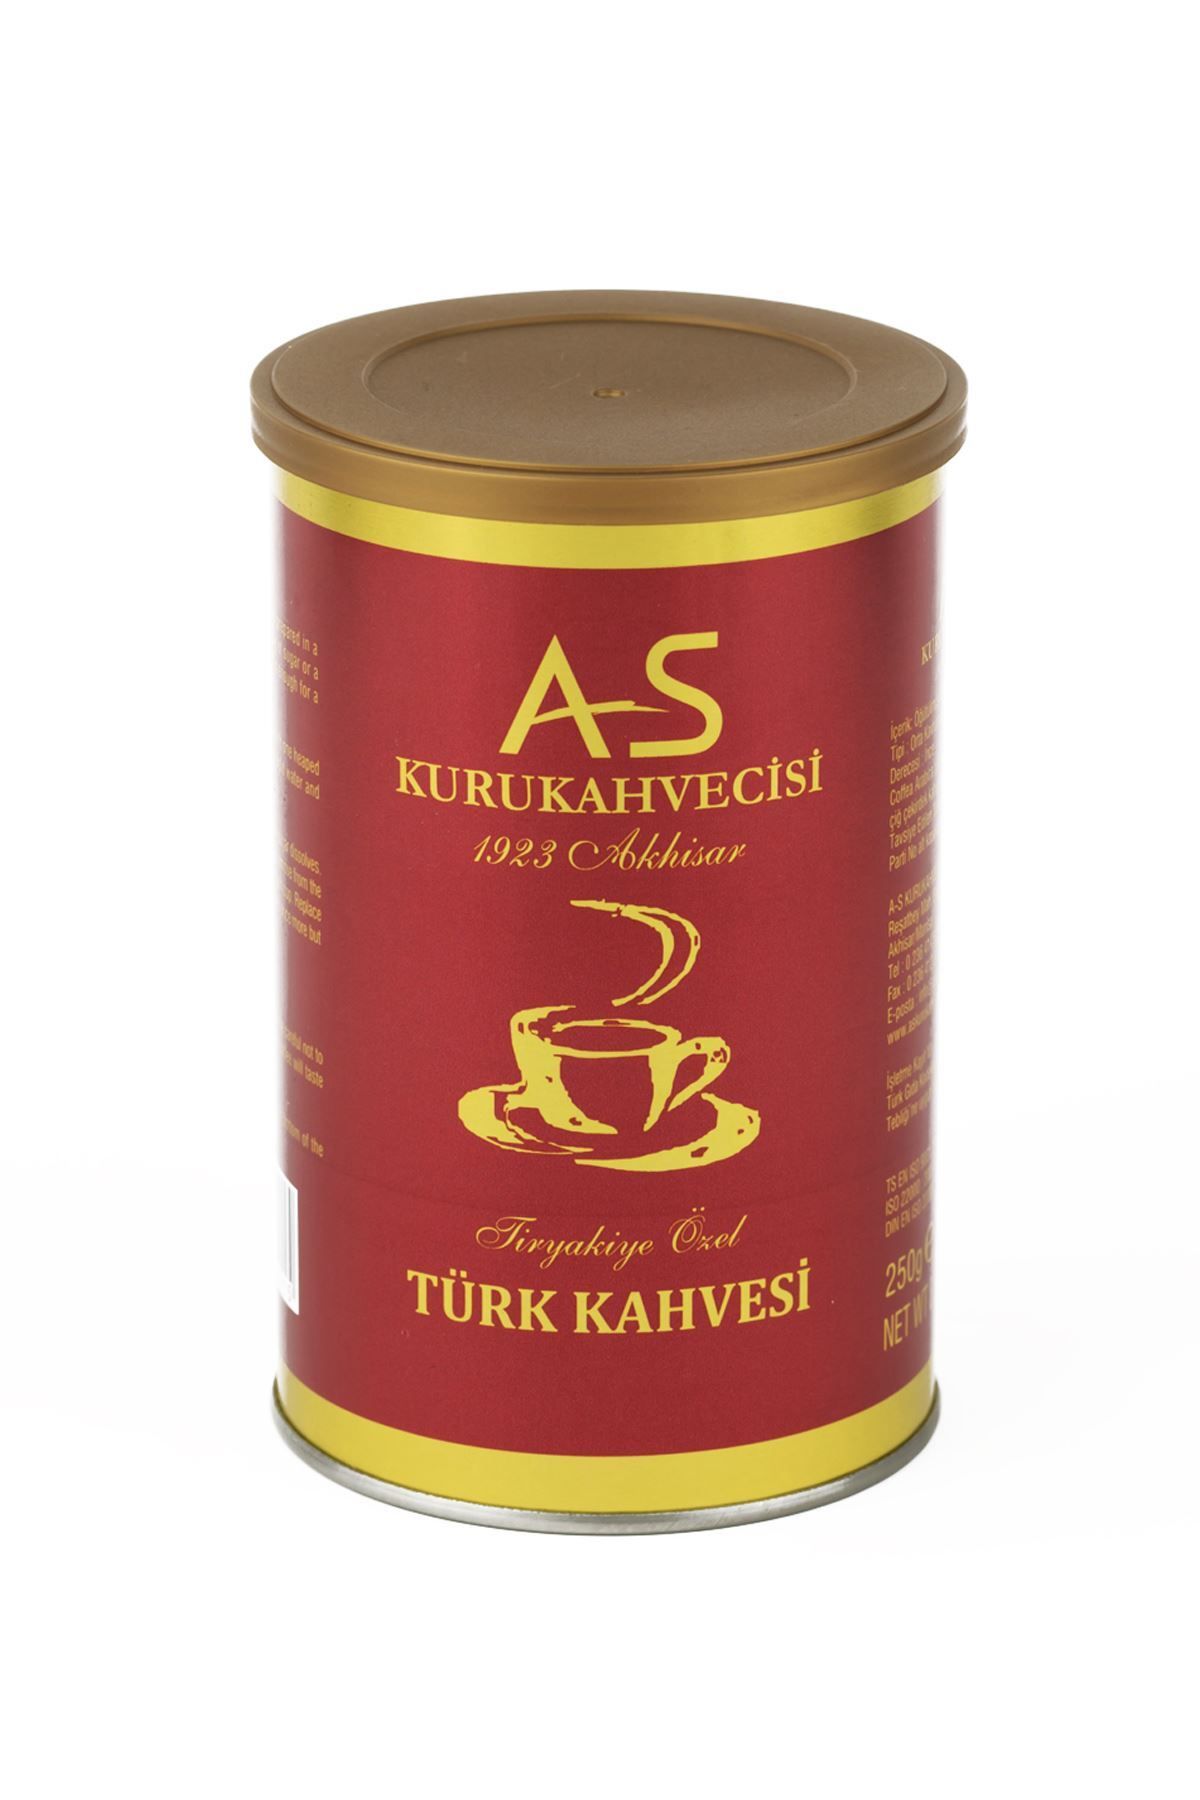 AS Kurukahvecisi Türk Kahvesi 250 Gr. Teneke